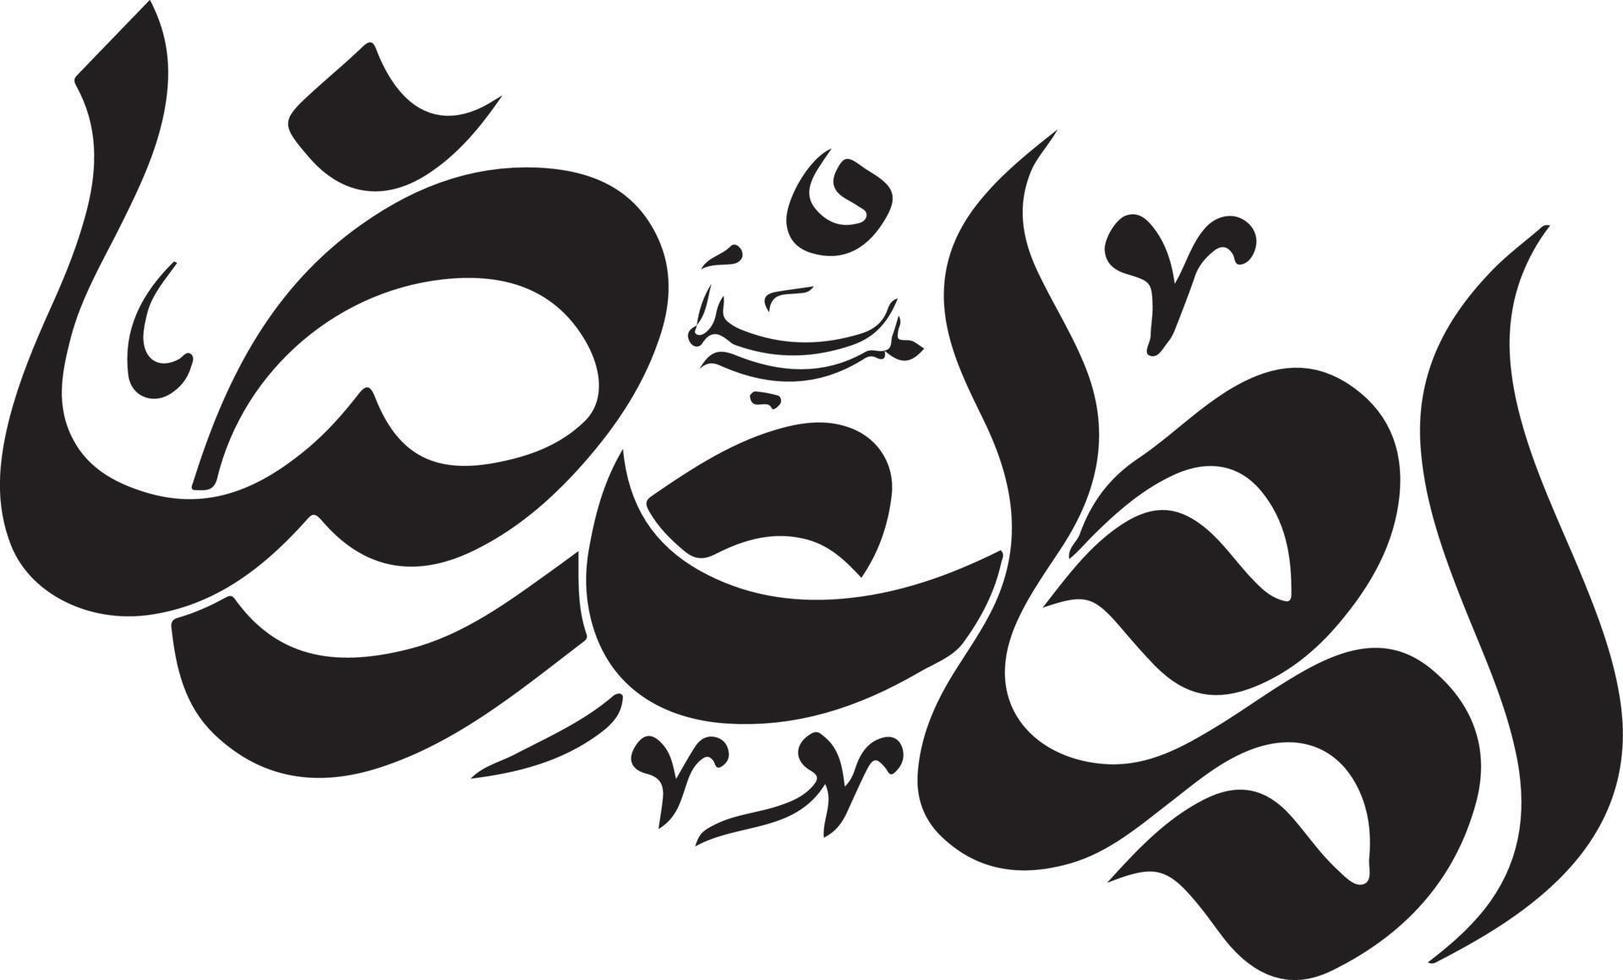 imam rasa une s islamique ourdou calligraphie vecteur